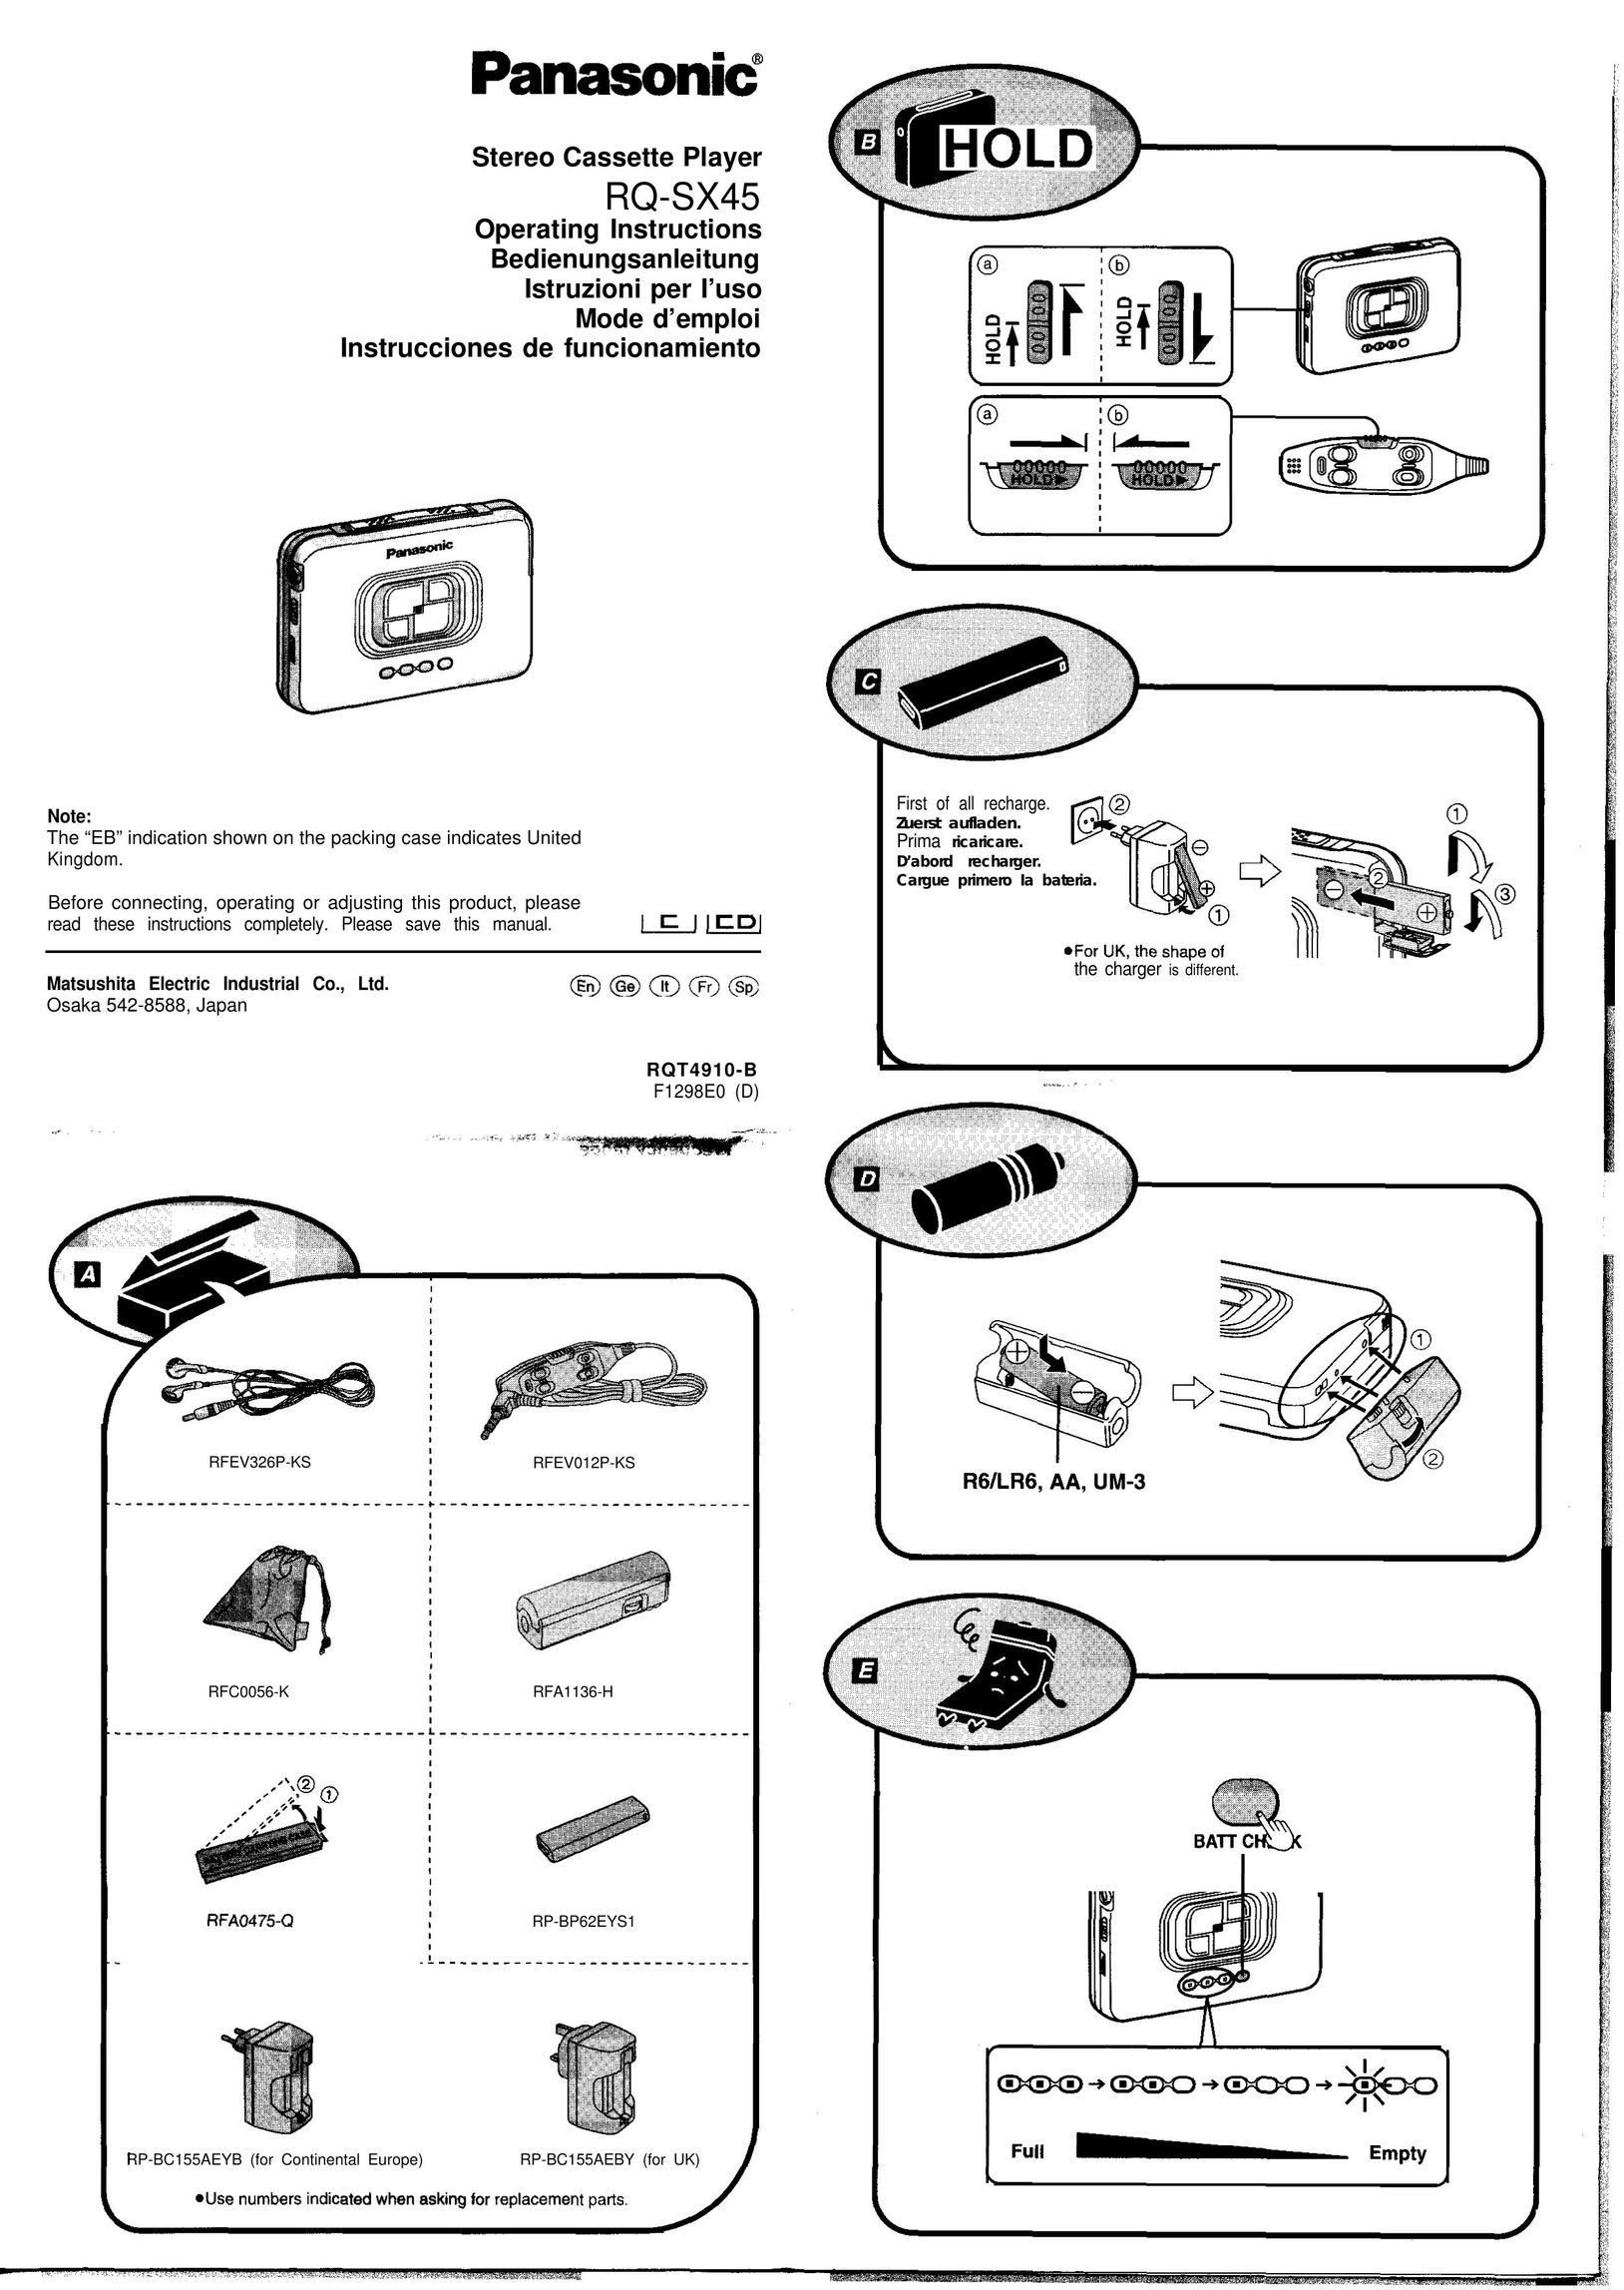 Panasonic RQ-SX45 Cassette Player User Manual